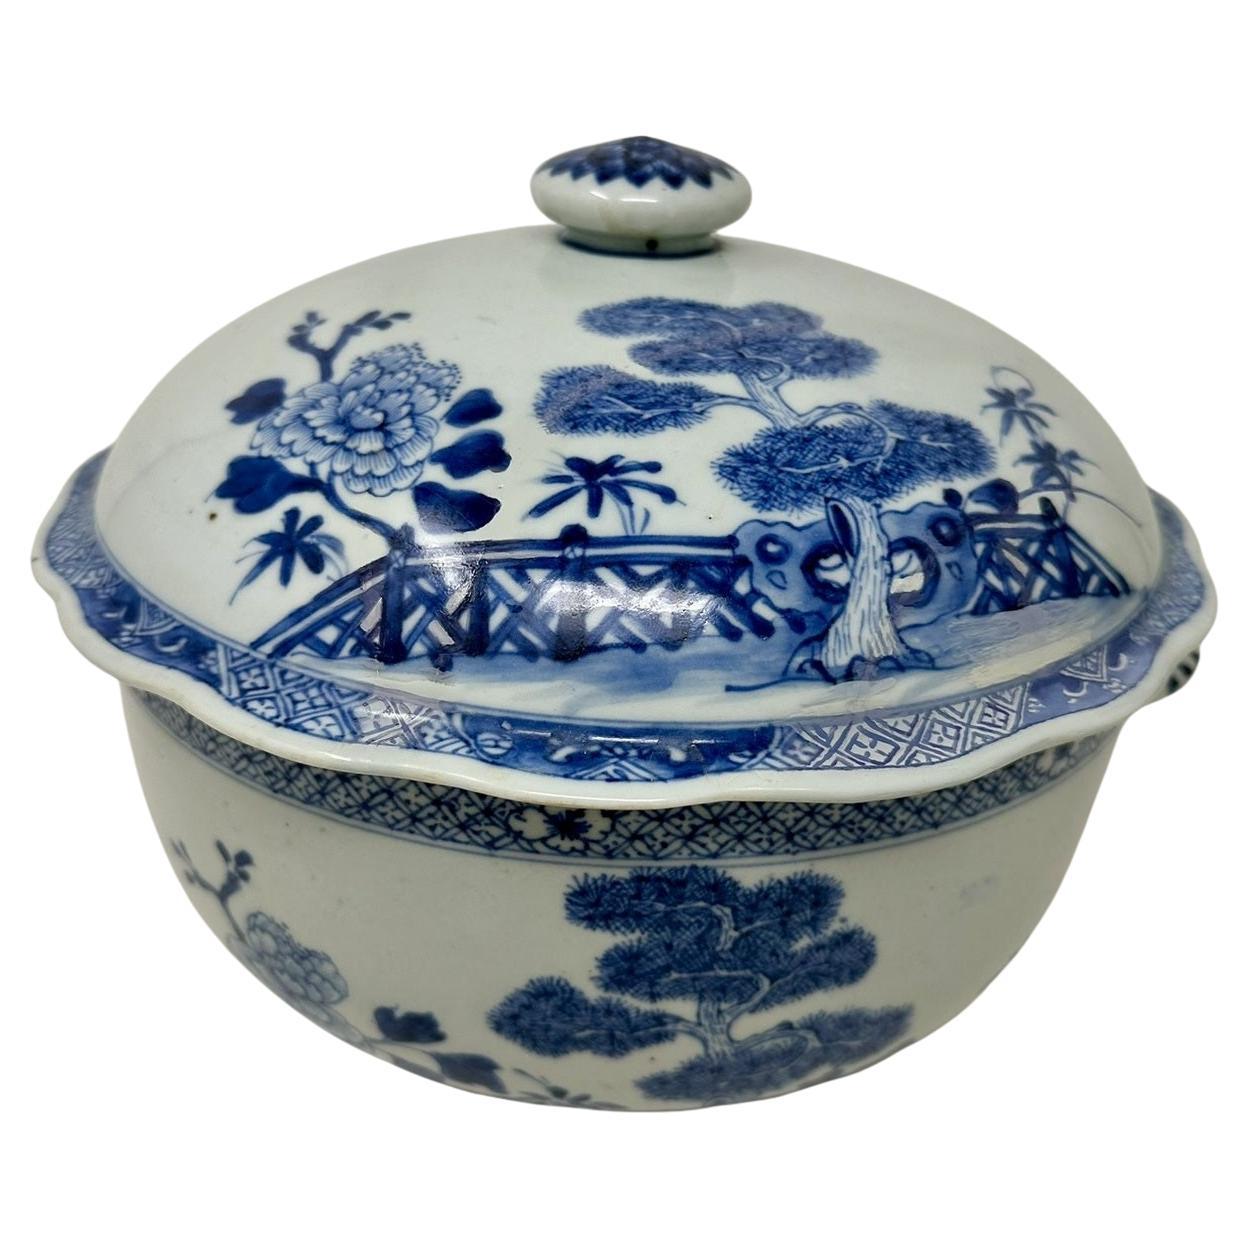 Antique Chinese Export Porcelain Blue White Chien Lung Soup Tureen Centerpiece For Sale